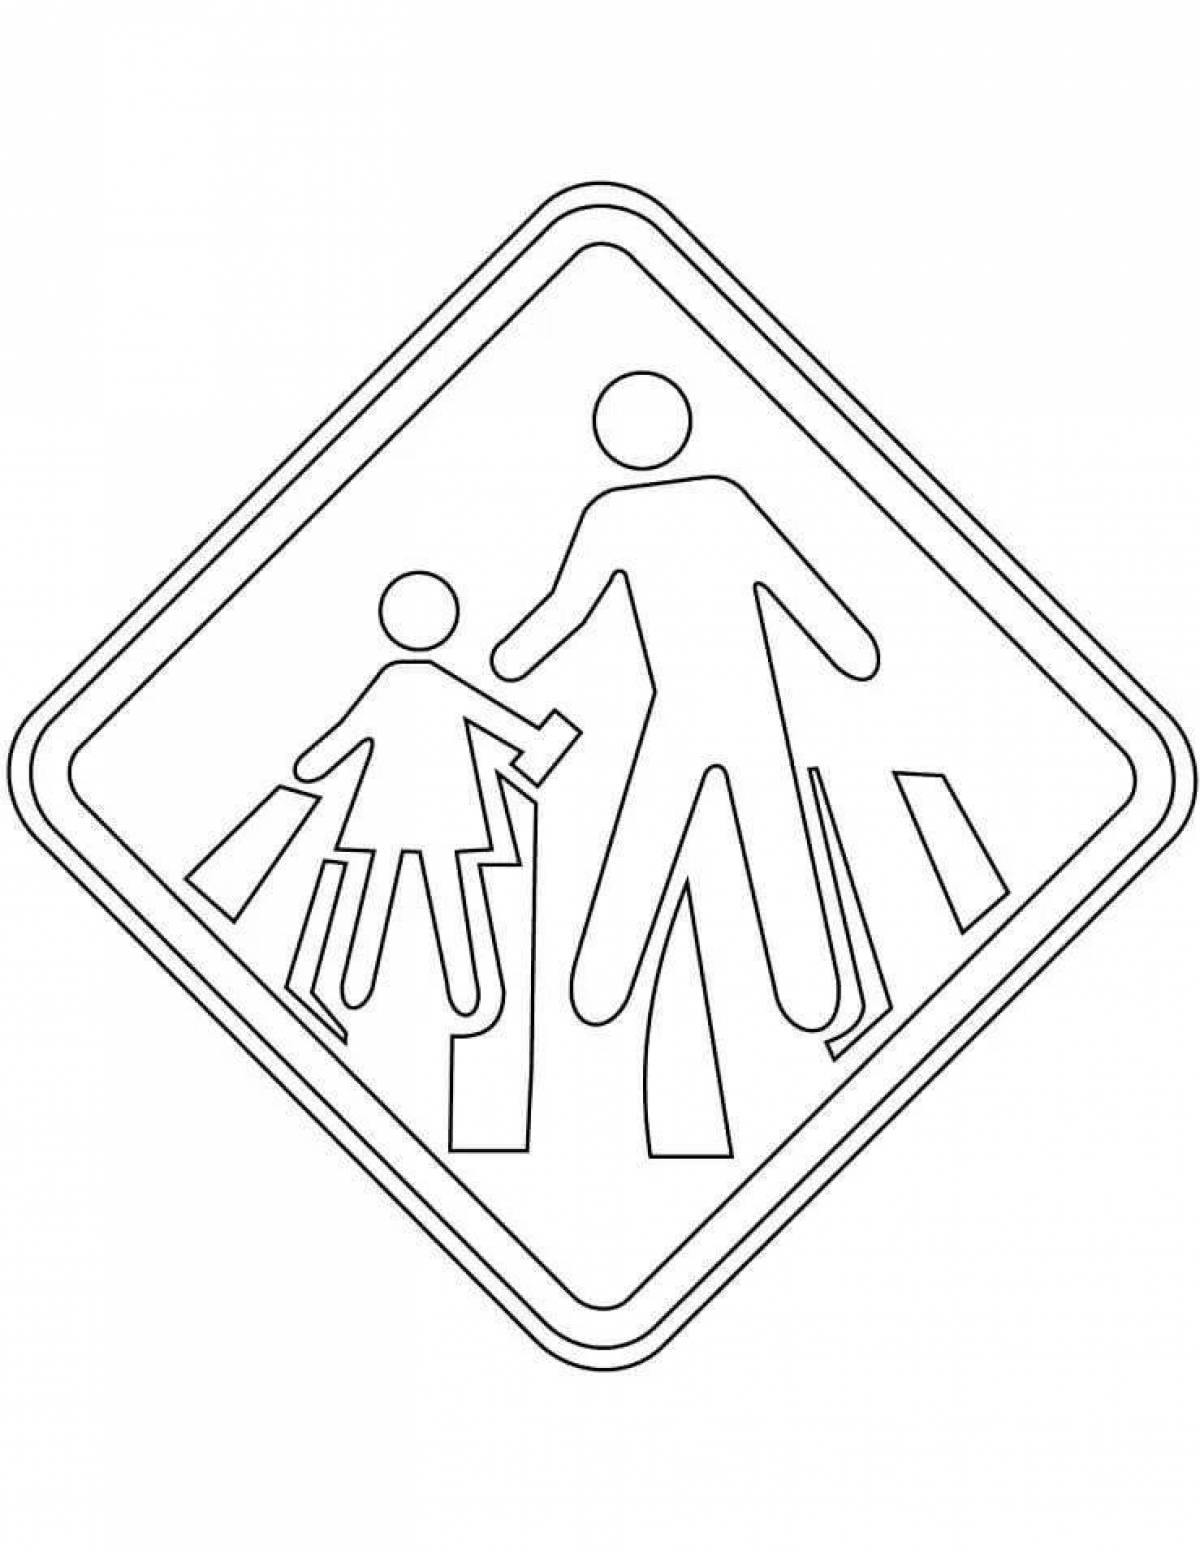 Sign caution children road template #1